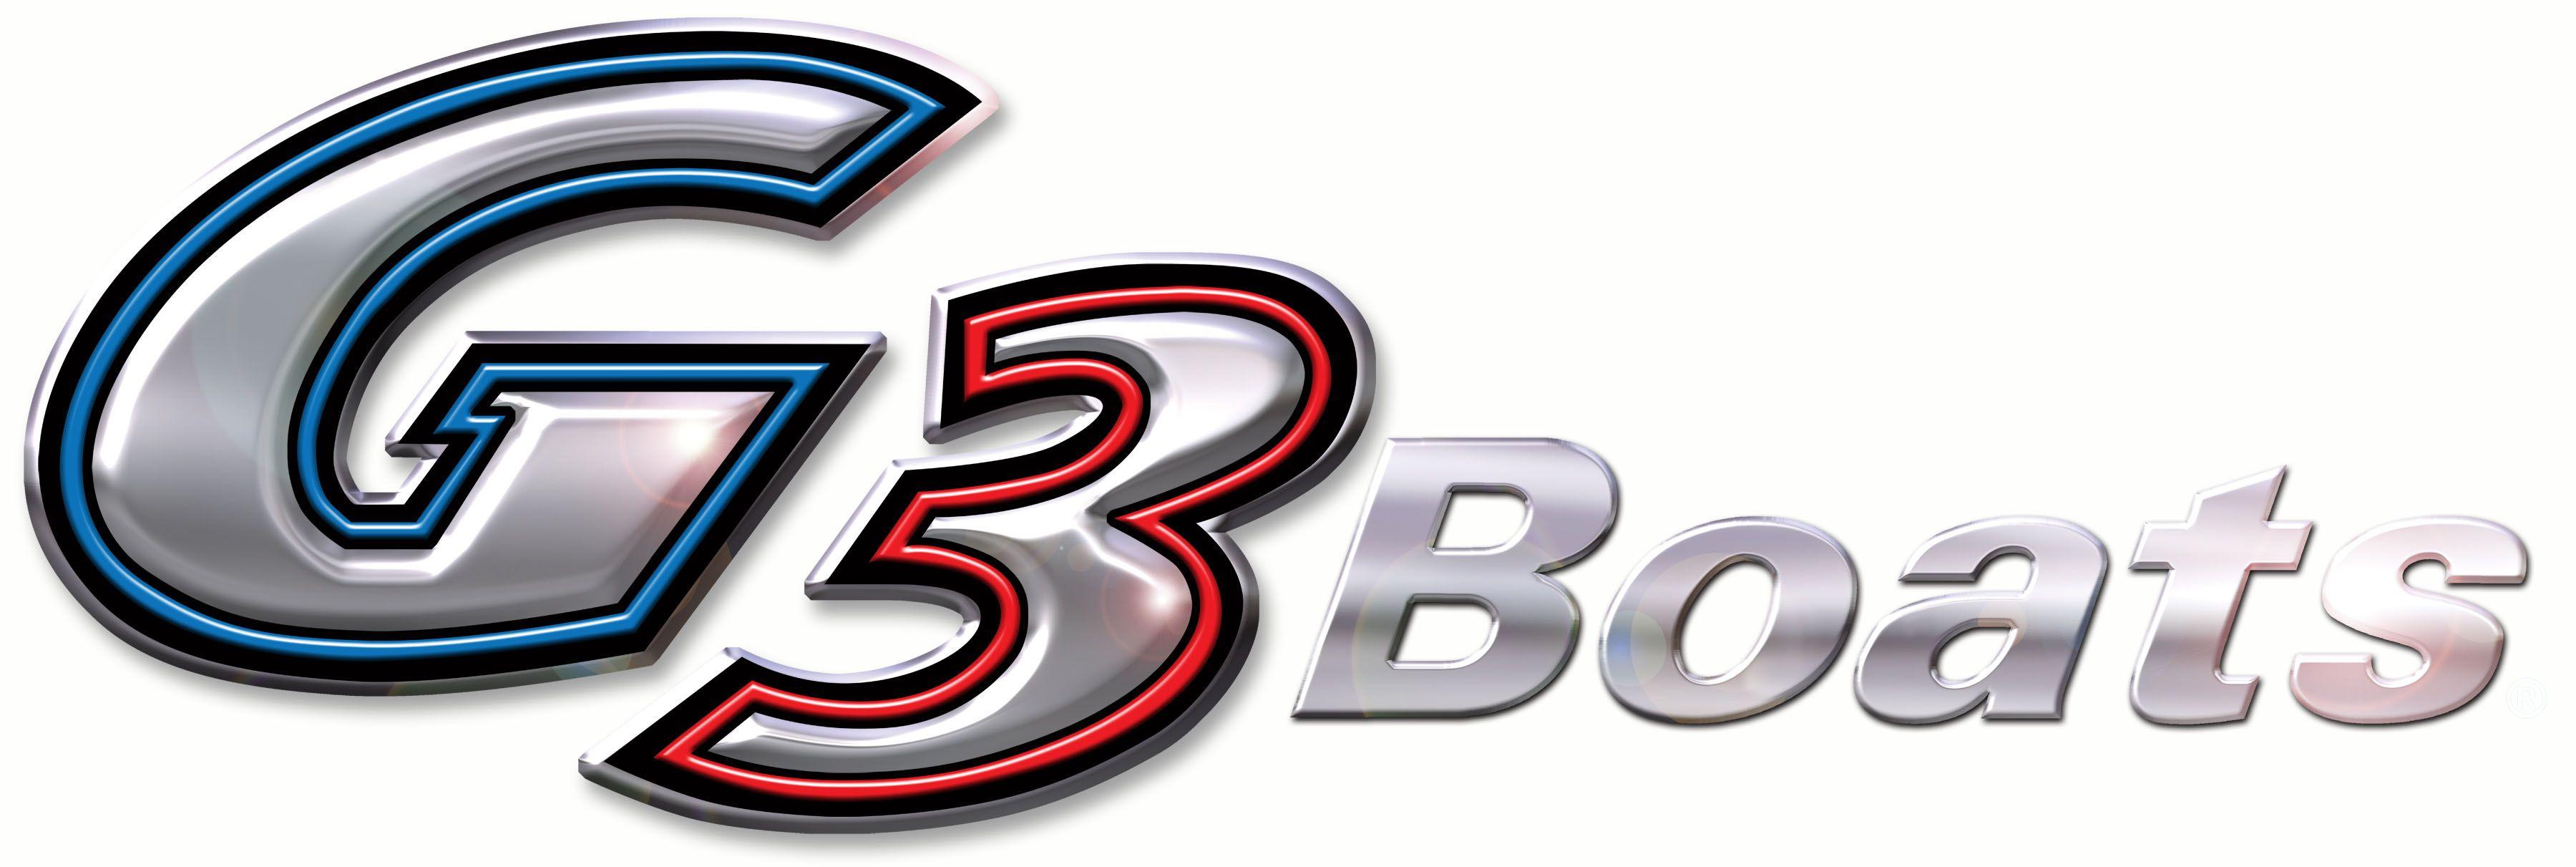 G3 Logo - G3-Boats-logo - Mobile Boat Show